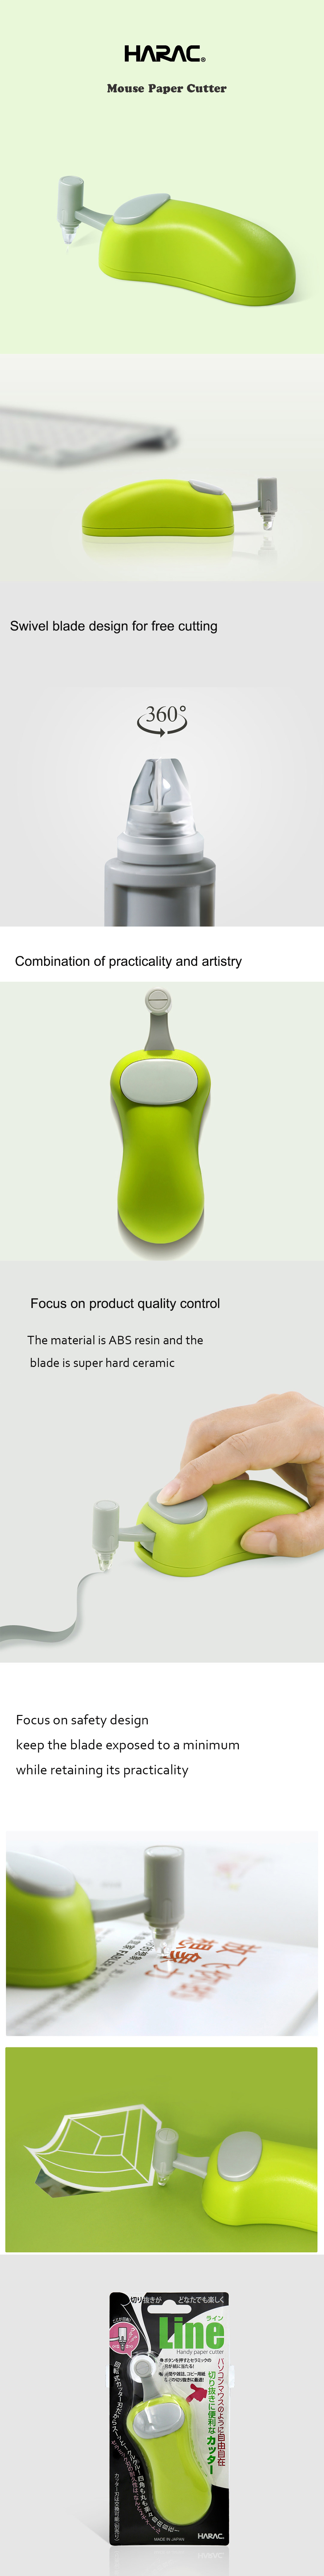 HARAC-Mouse-Shape-Paper-Cutter-Machine-Art-Paper-Trimmer-Cutting-Ceramics-Blades-Green-from-XM-1609441-1